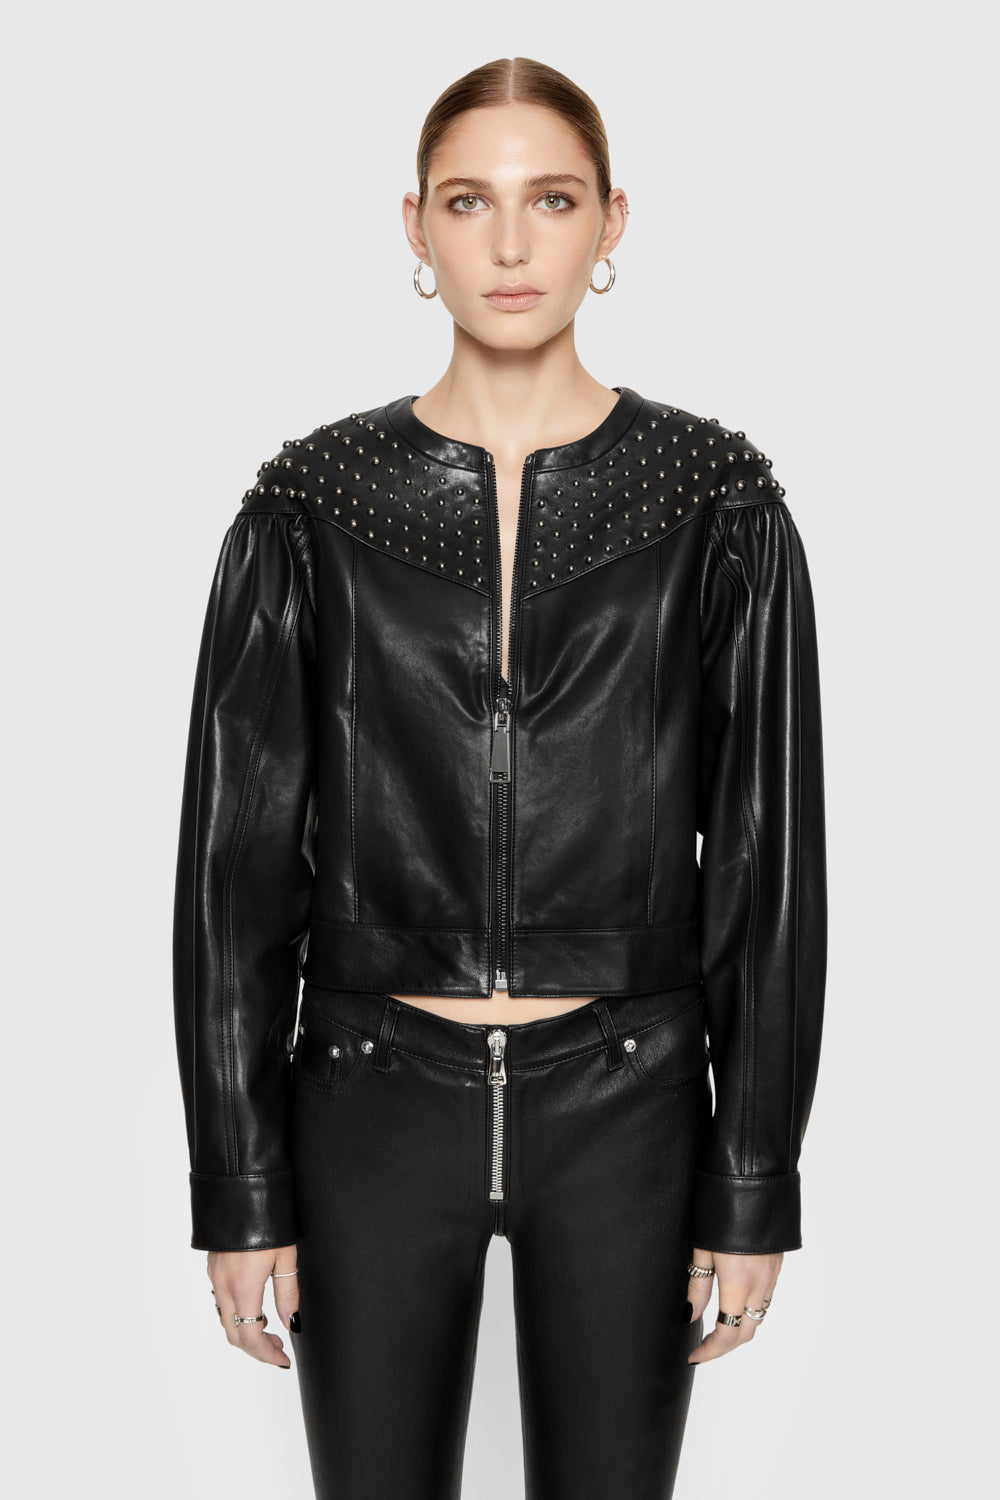 Ozzy Studded Leather Jacket